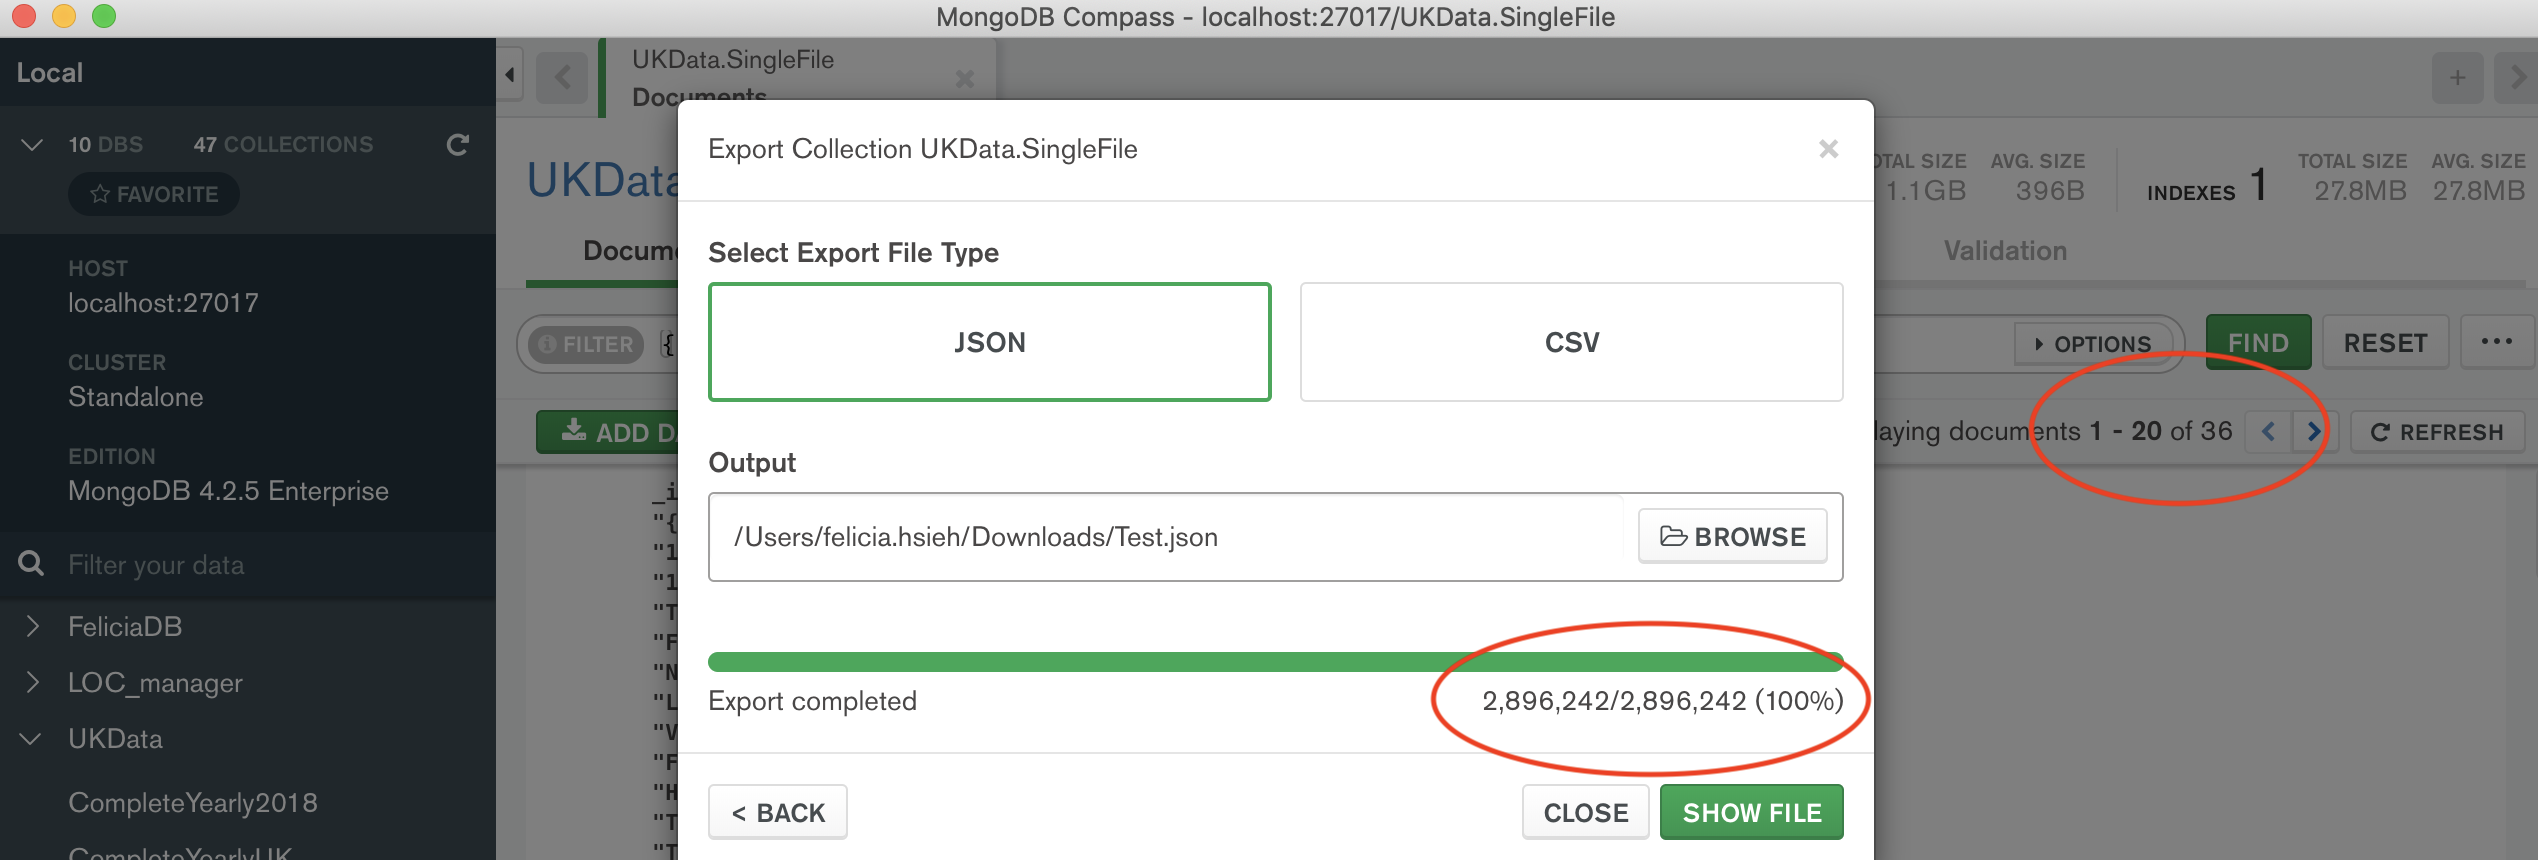 mongodb compass export aggregation results